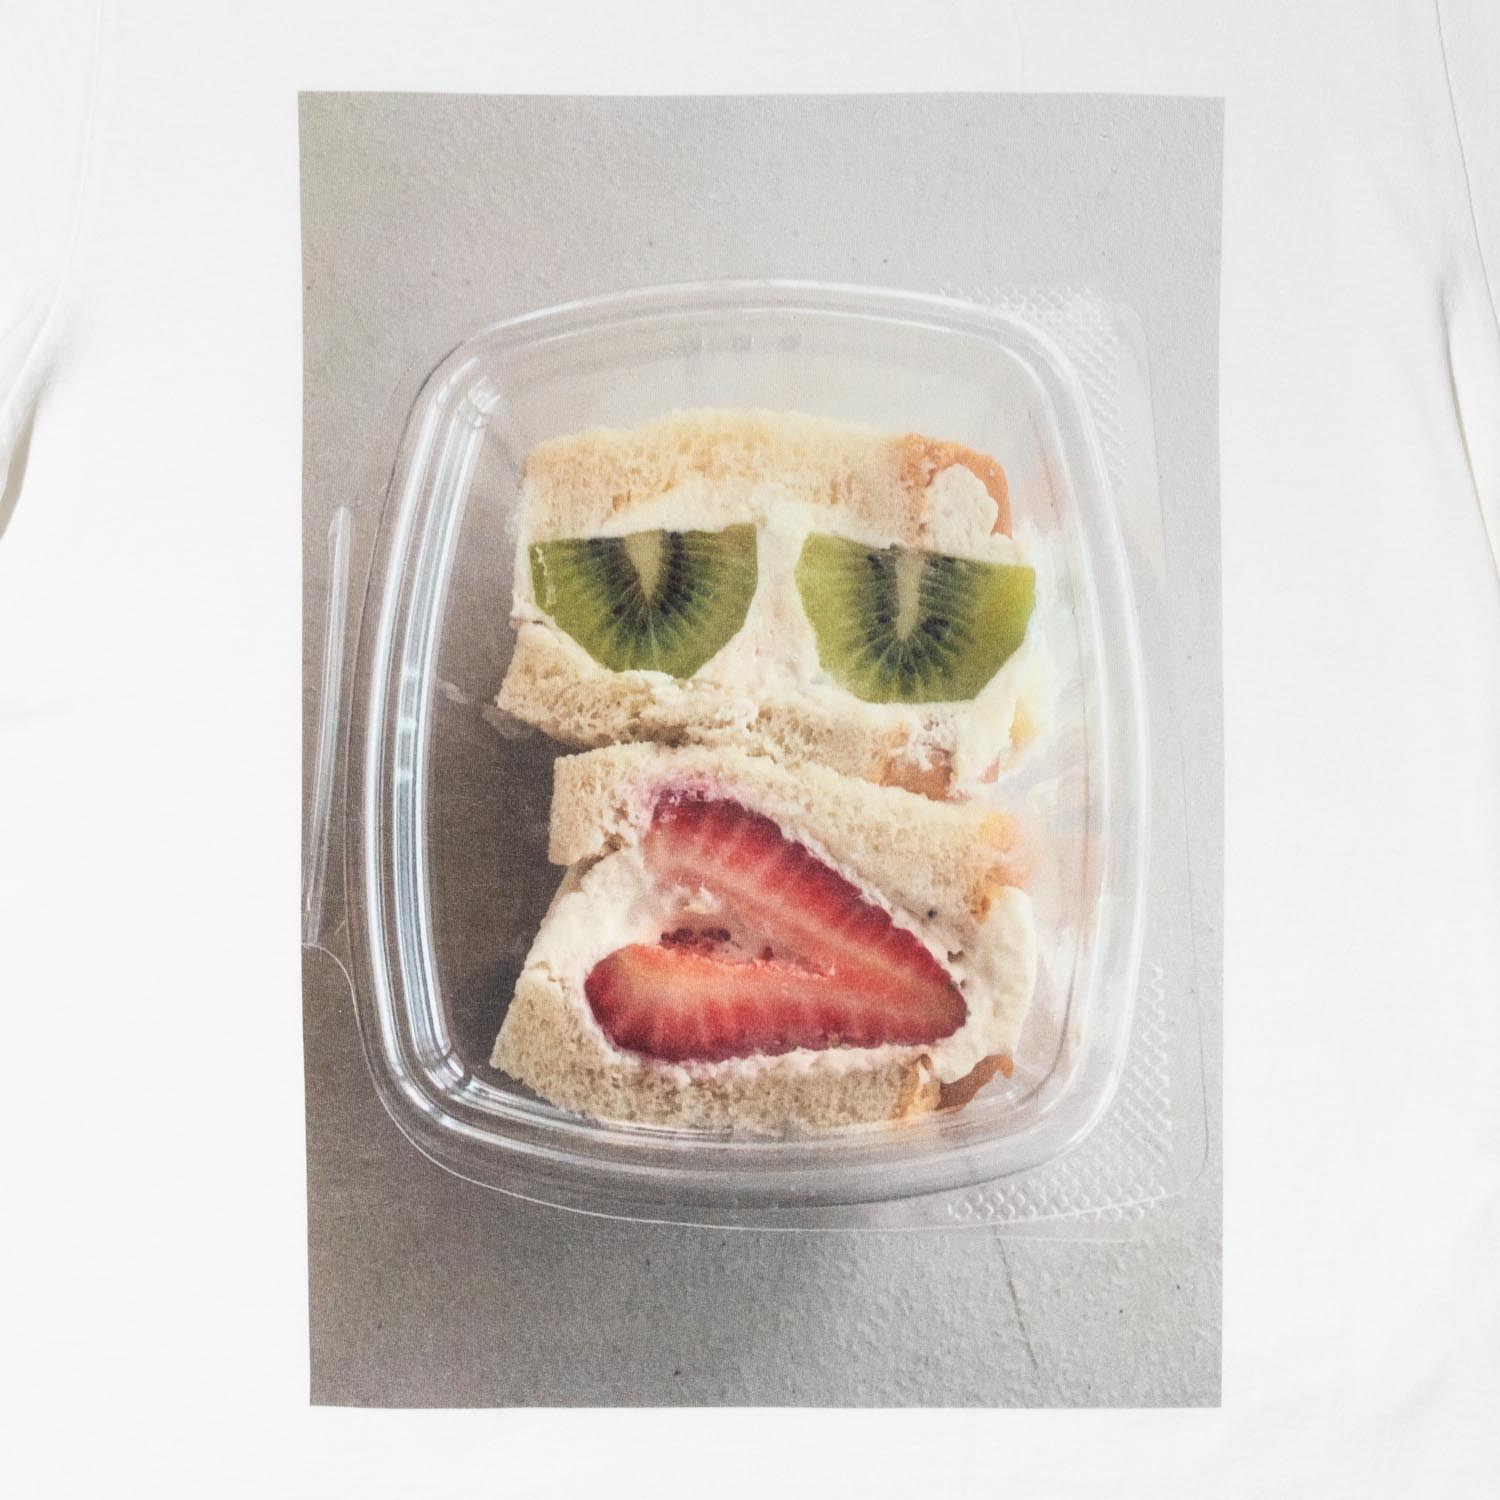 FRUIT SANDWICH LS designed by Hirohisa Yokoyam